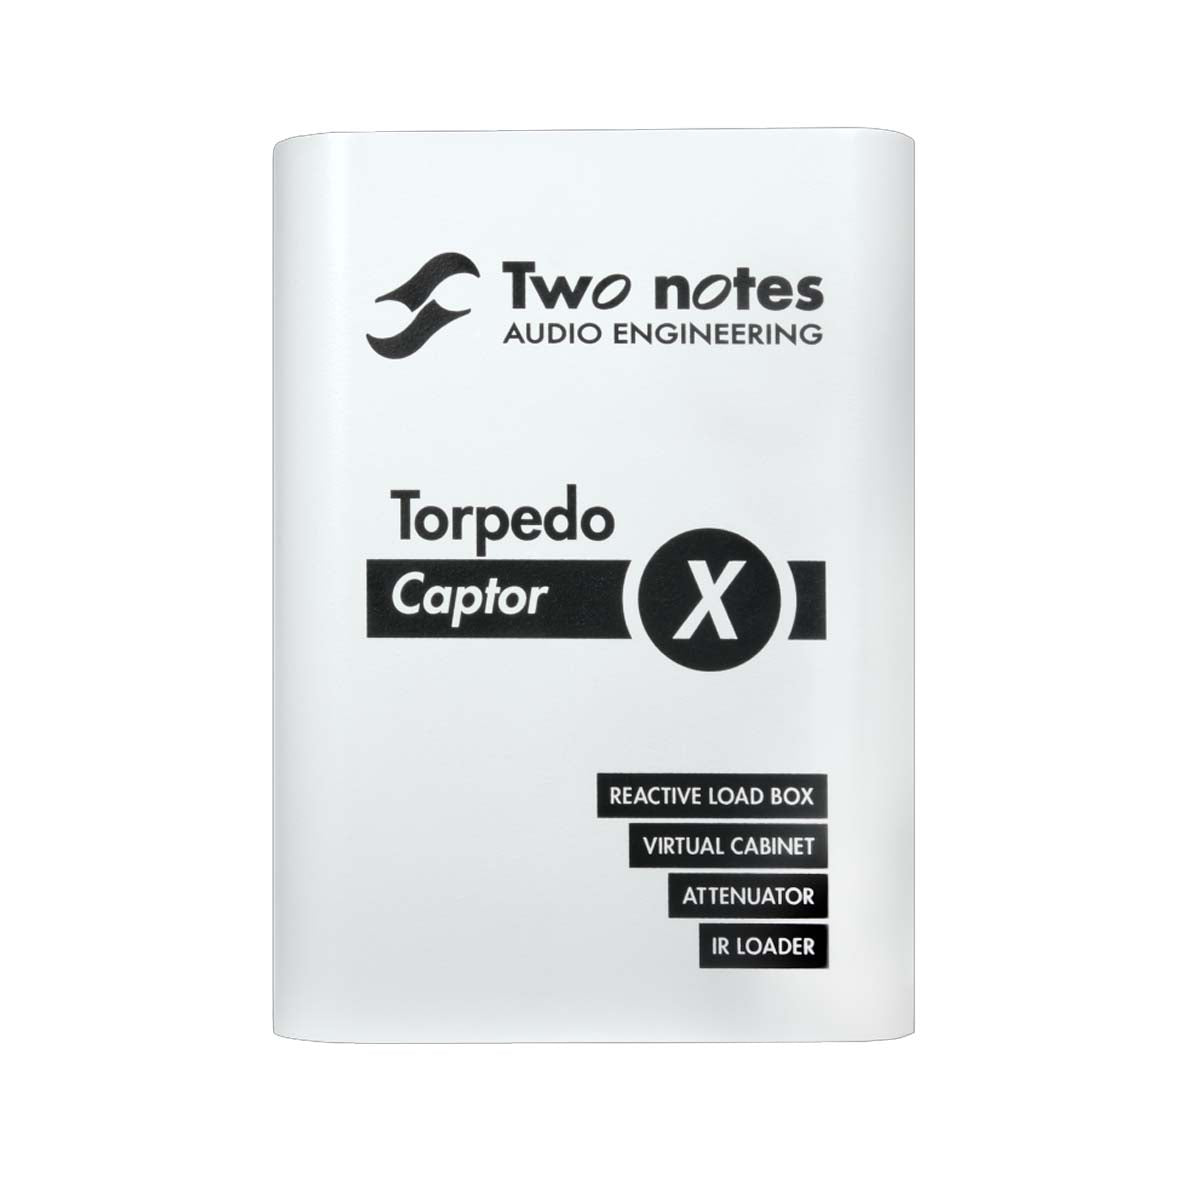 Two Notes Torpedo Captor X 8ohm Reactive LoadBox w/ Analog Speakersim & Attenuator